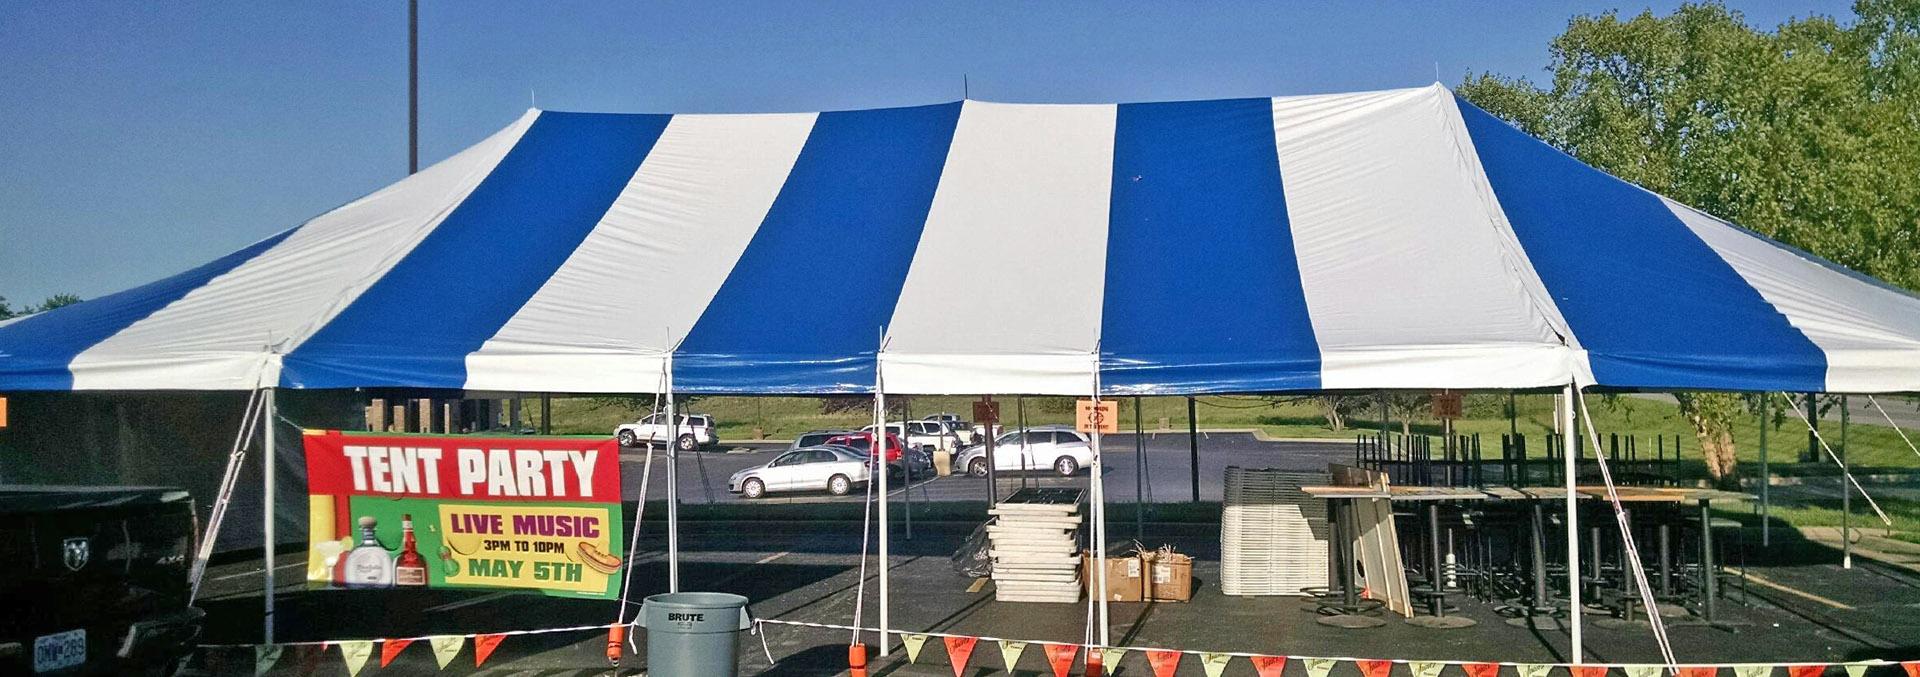 Midwest Event Party Wedding Tent Rentals Sales Big T Tents